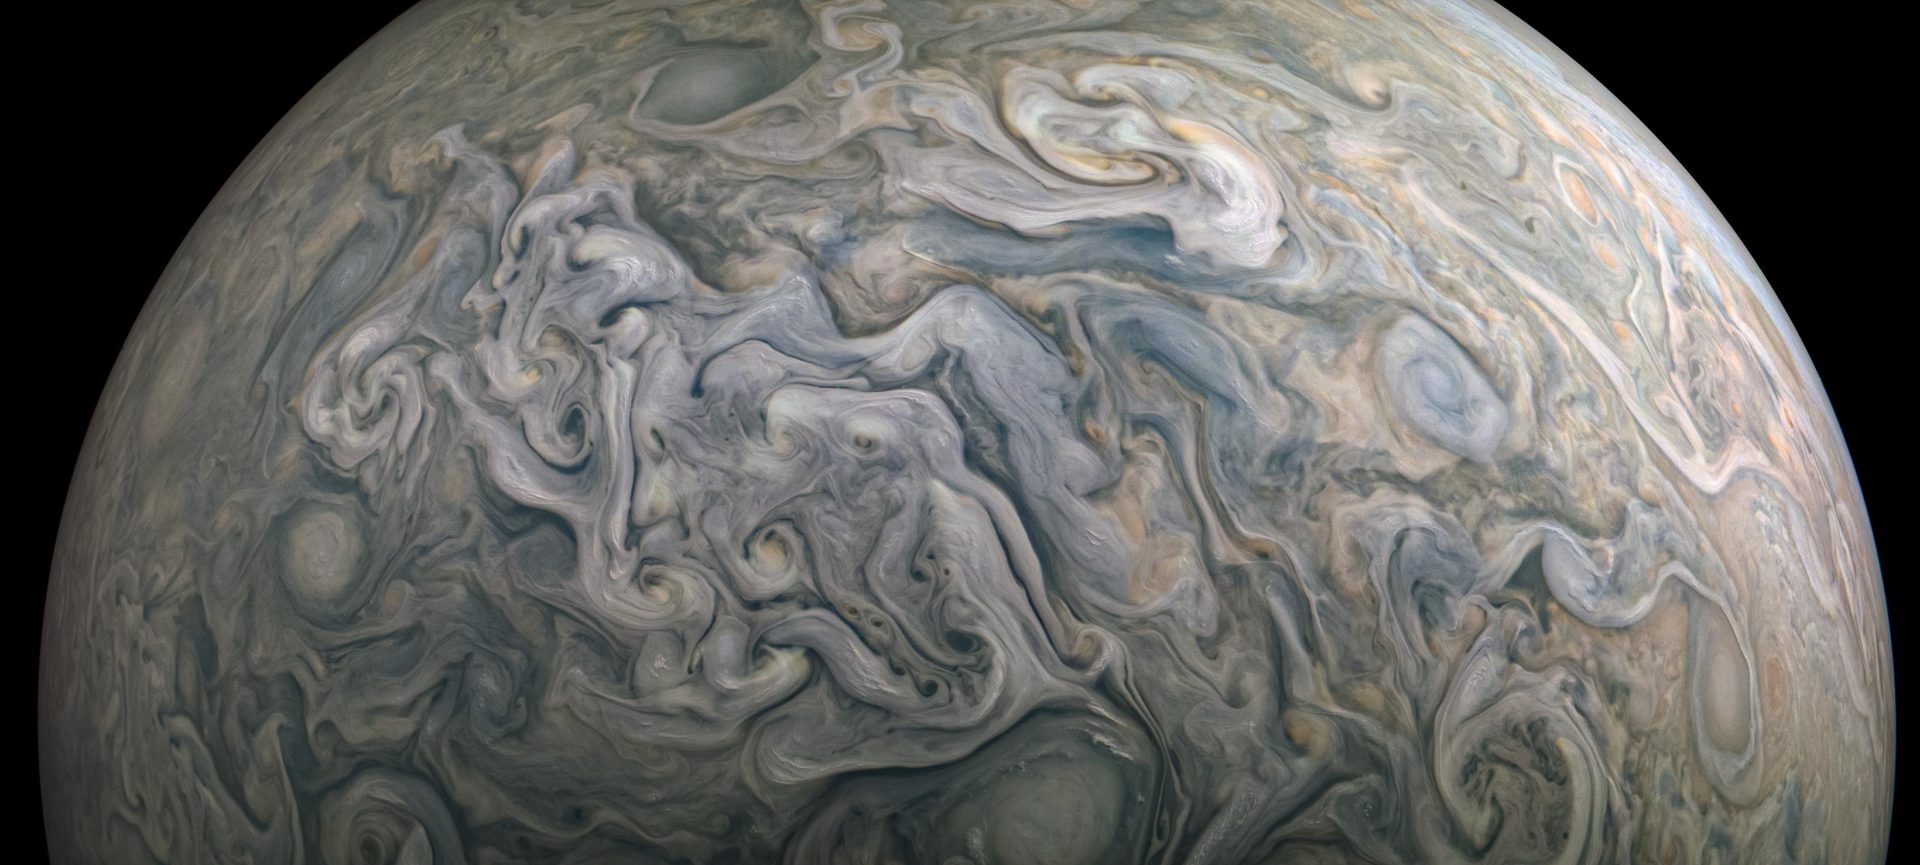 marbled blue-brown image of Jupiter's atmosphere